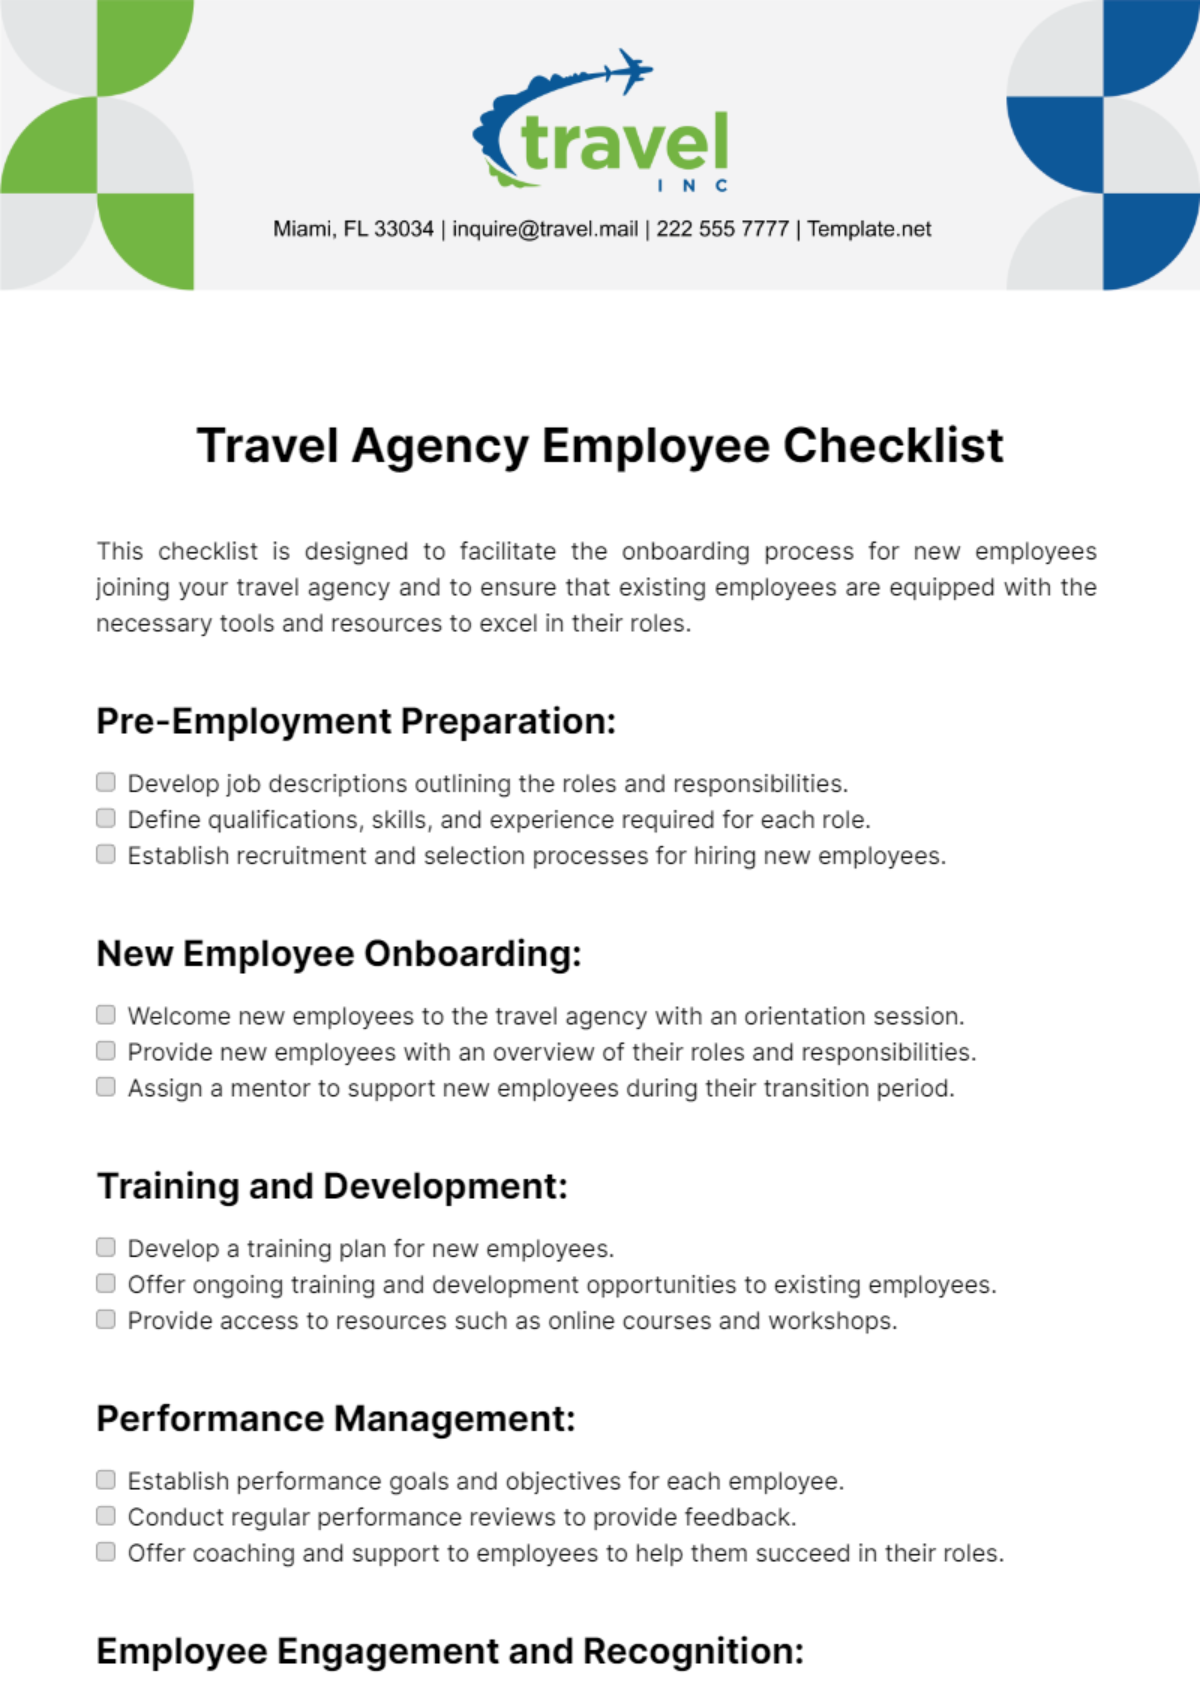 Travel Agency Employee Checklist Template